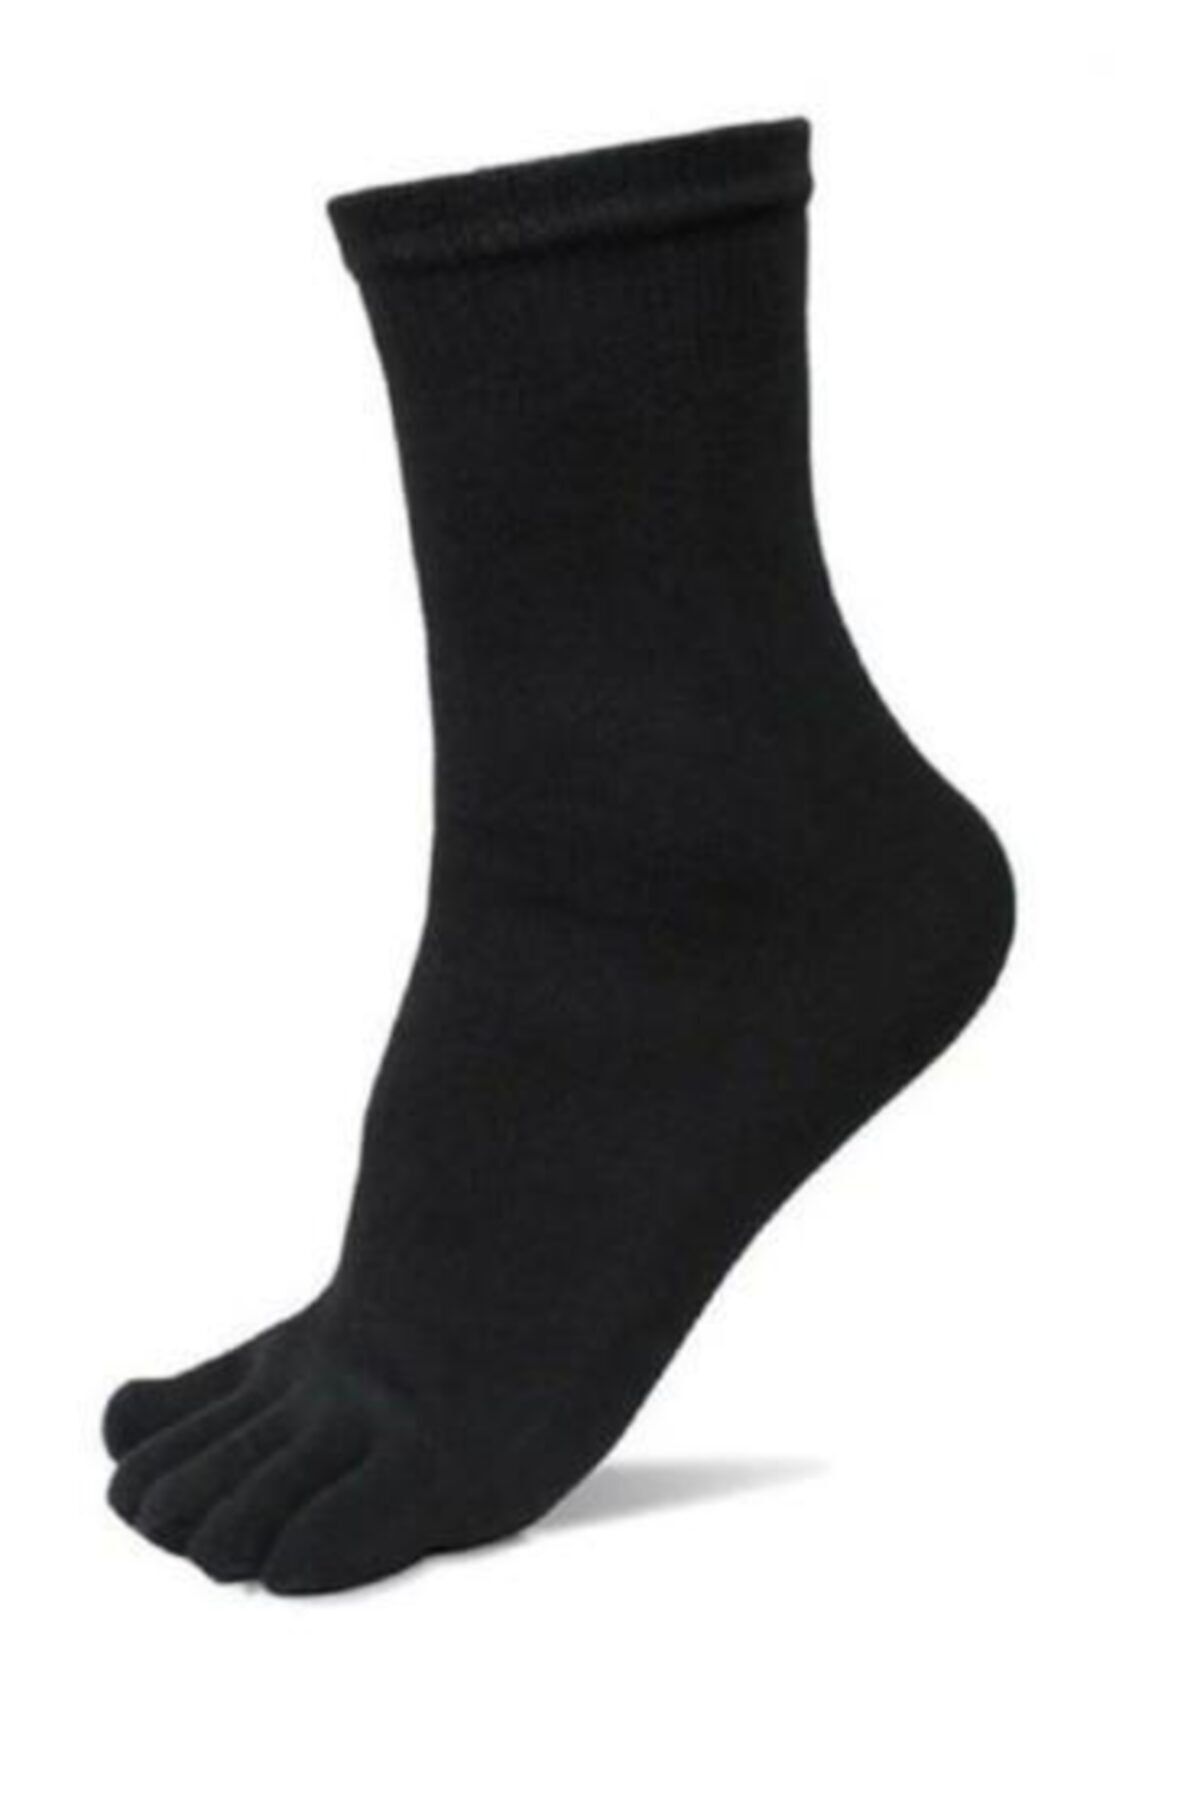 AKDEMİR 6'lı Pamuklu Parmaklı Çorap Erkek Parmak Çorap